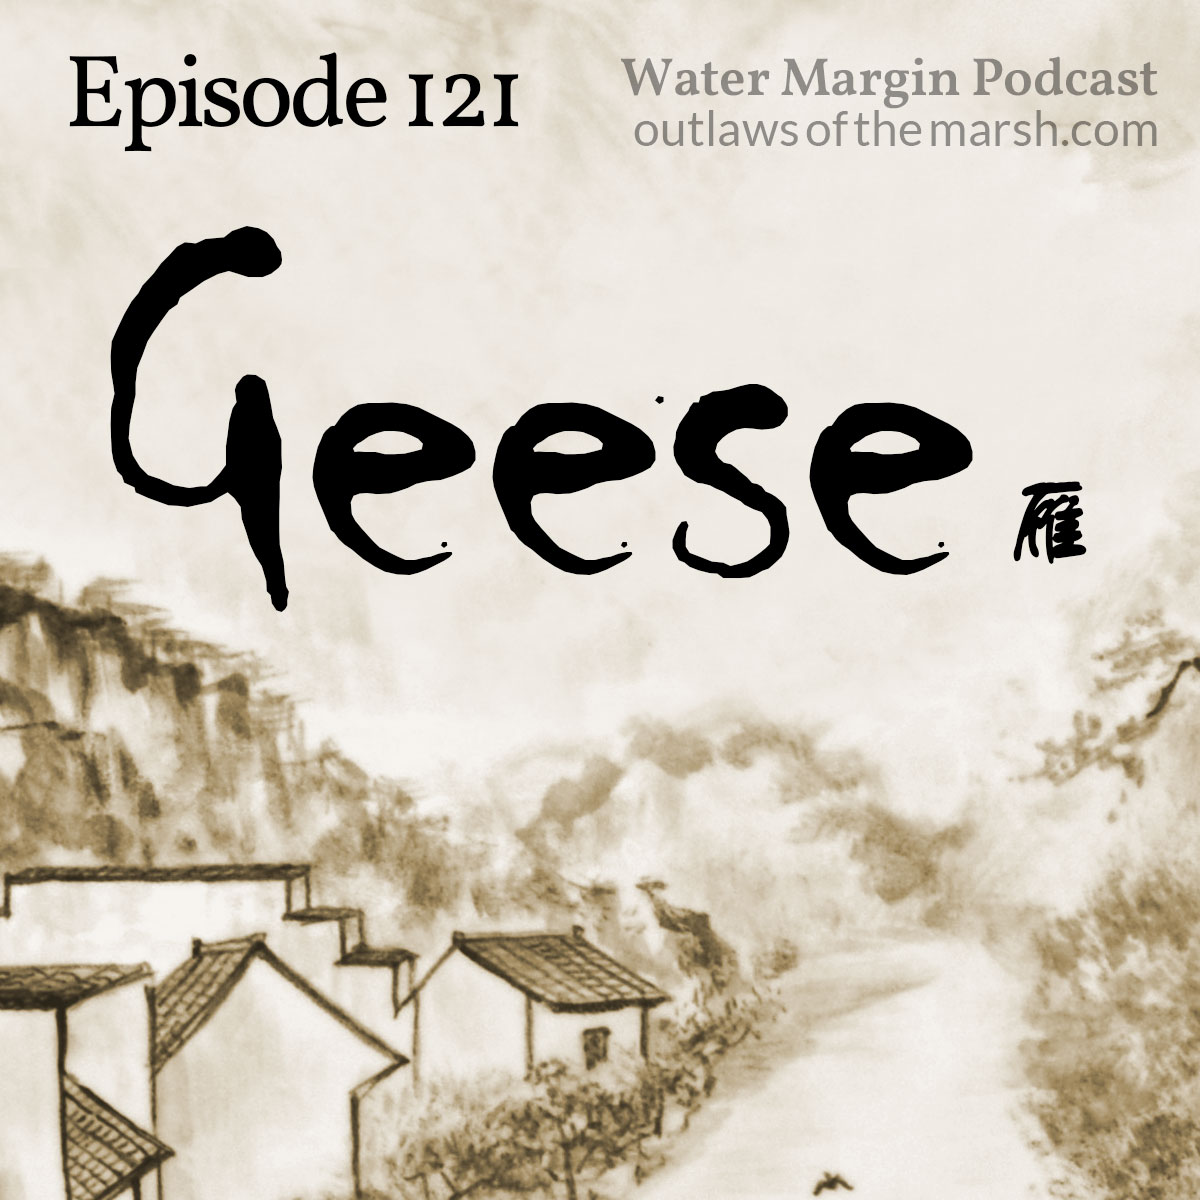 Water Margin Podcast: Episode 121